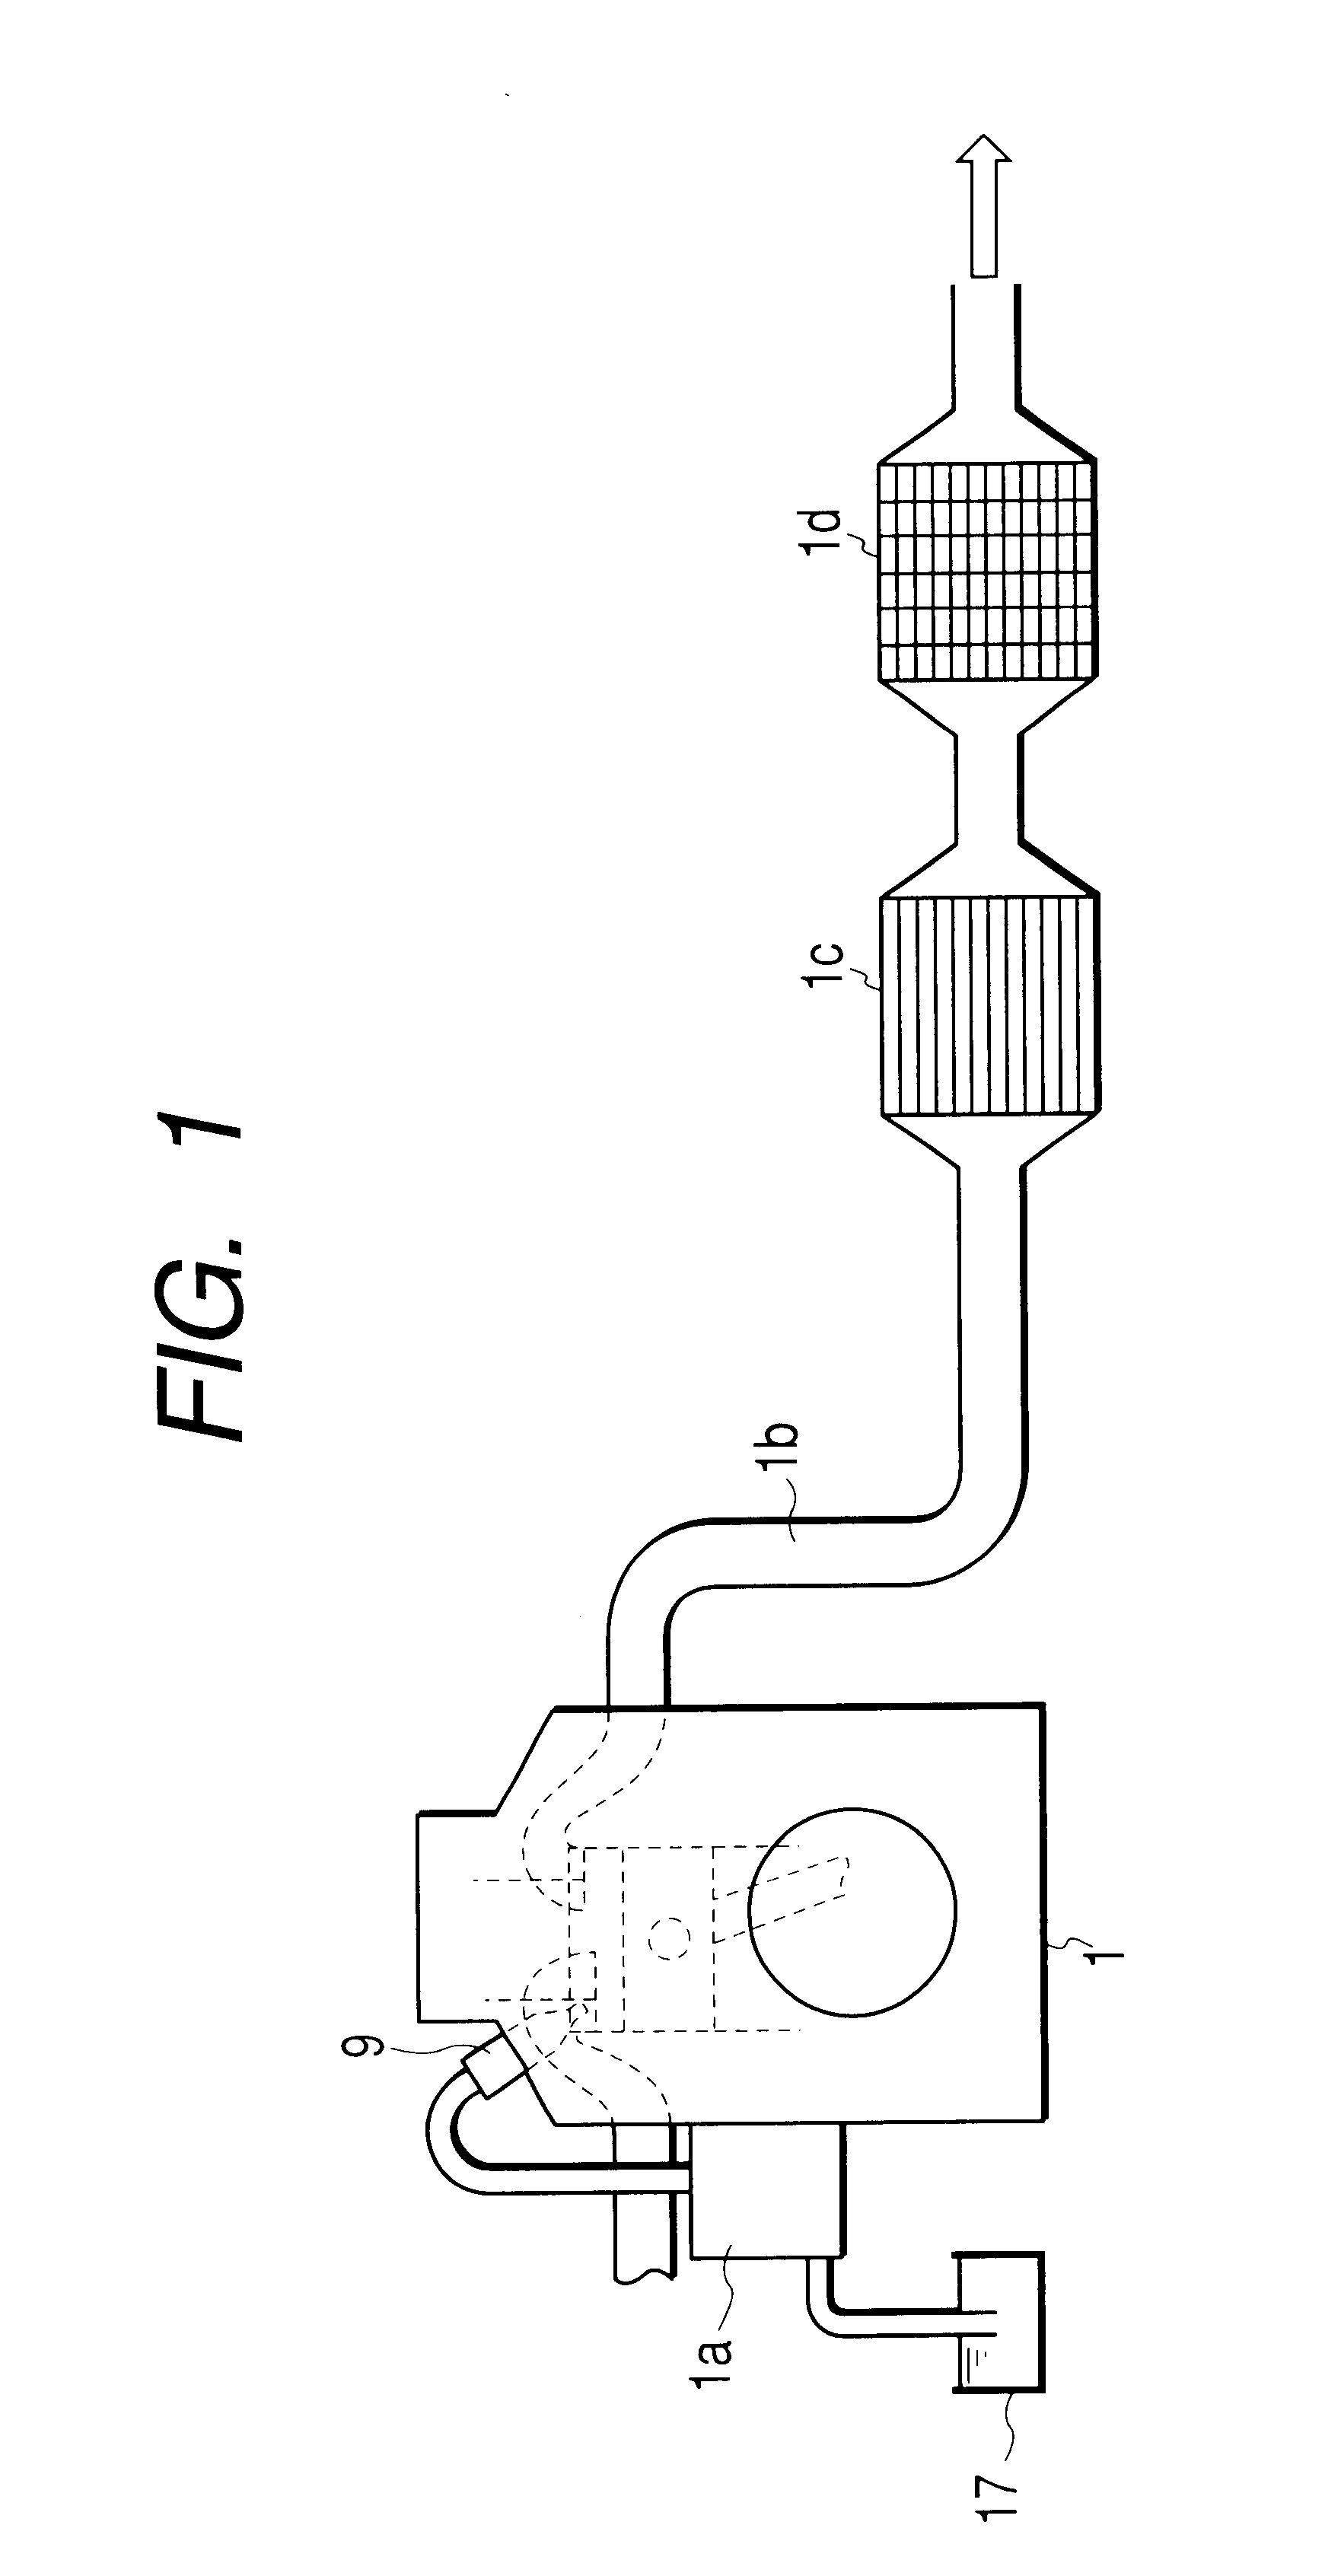 Accumulator type fuel injection apparatus